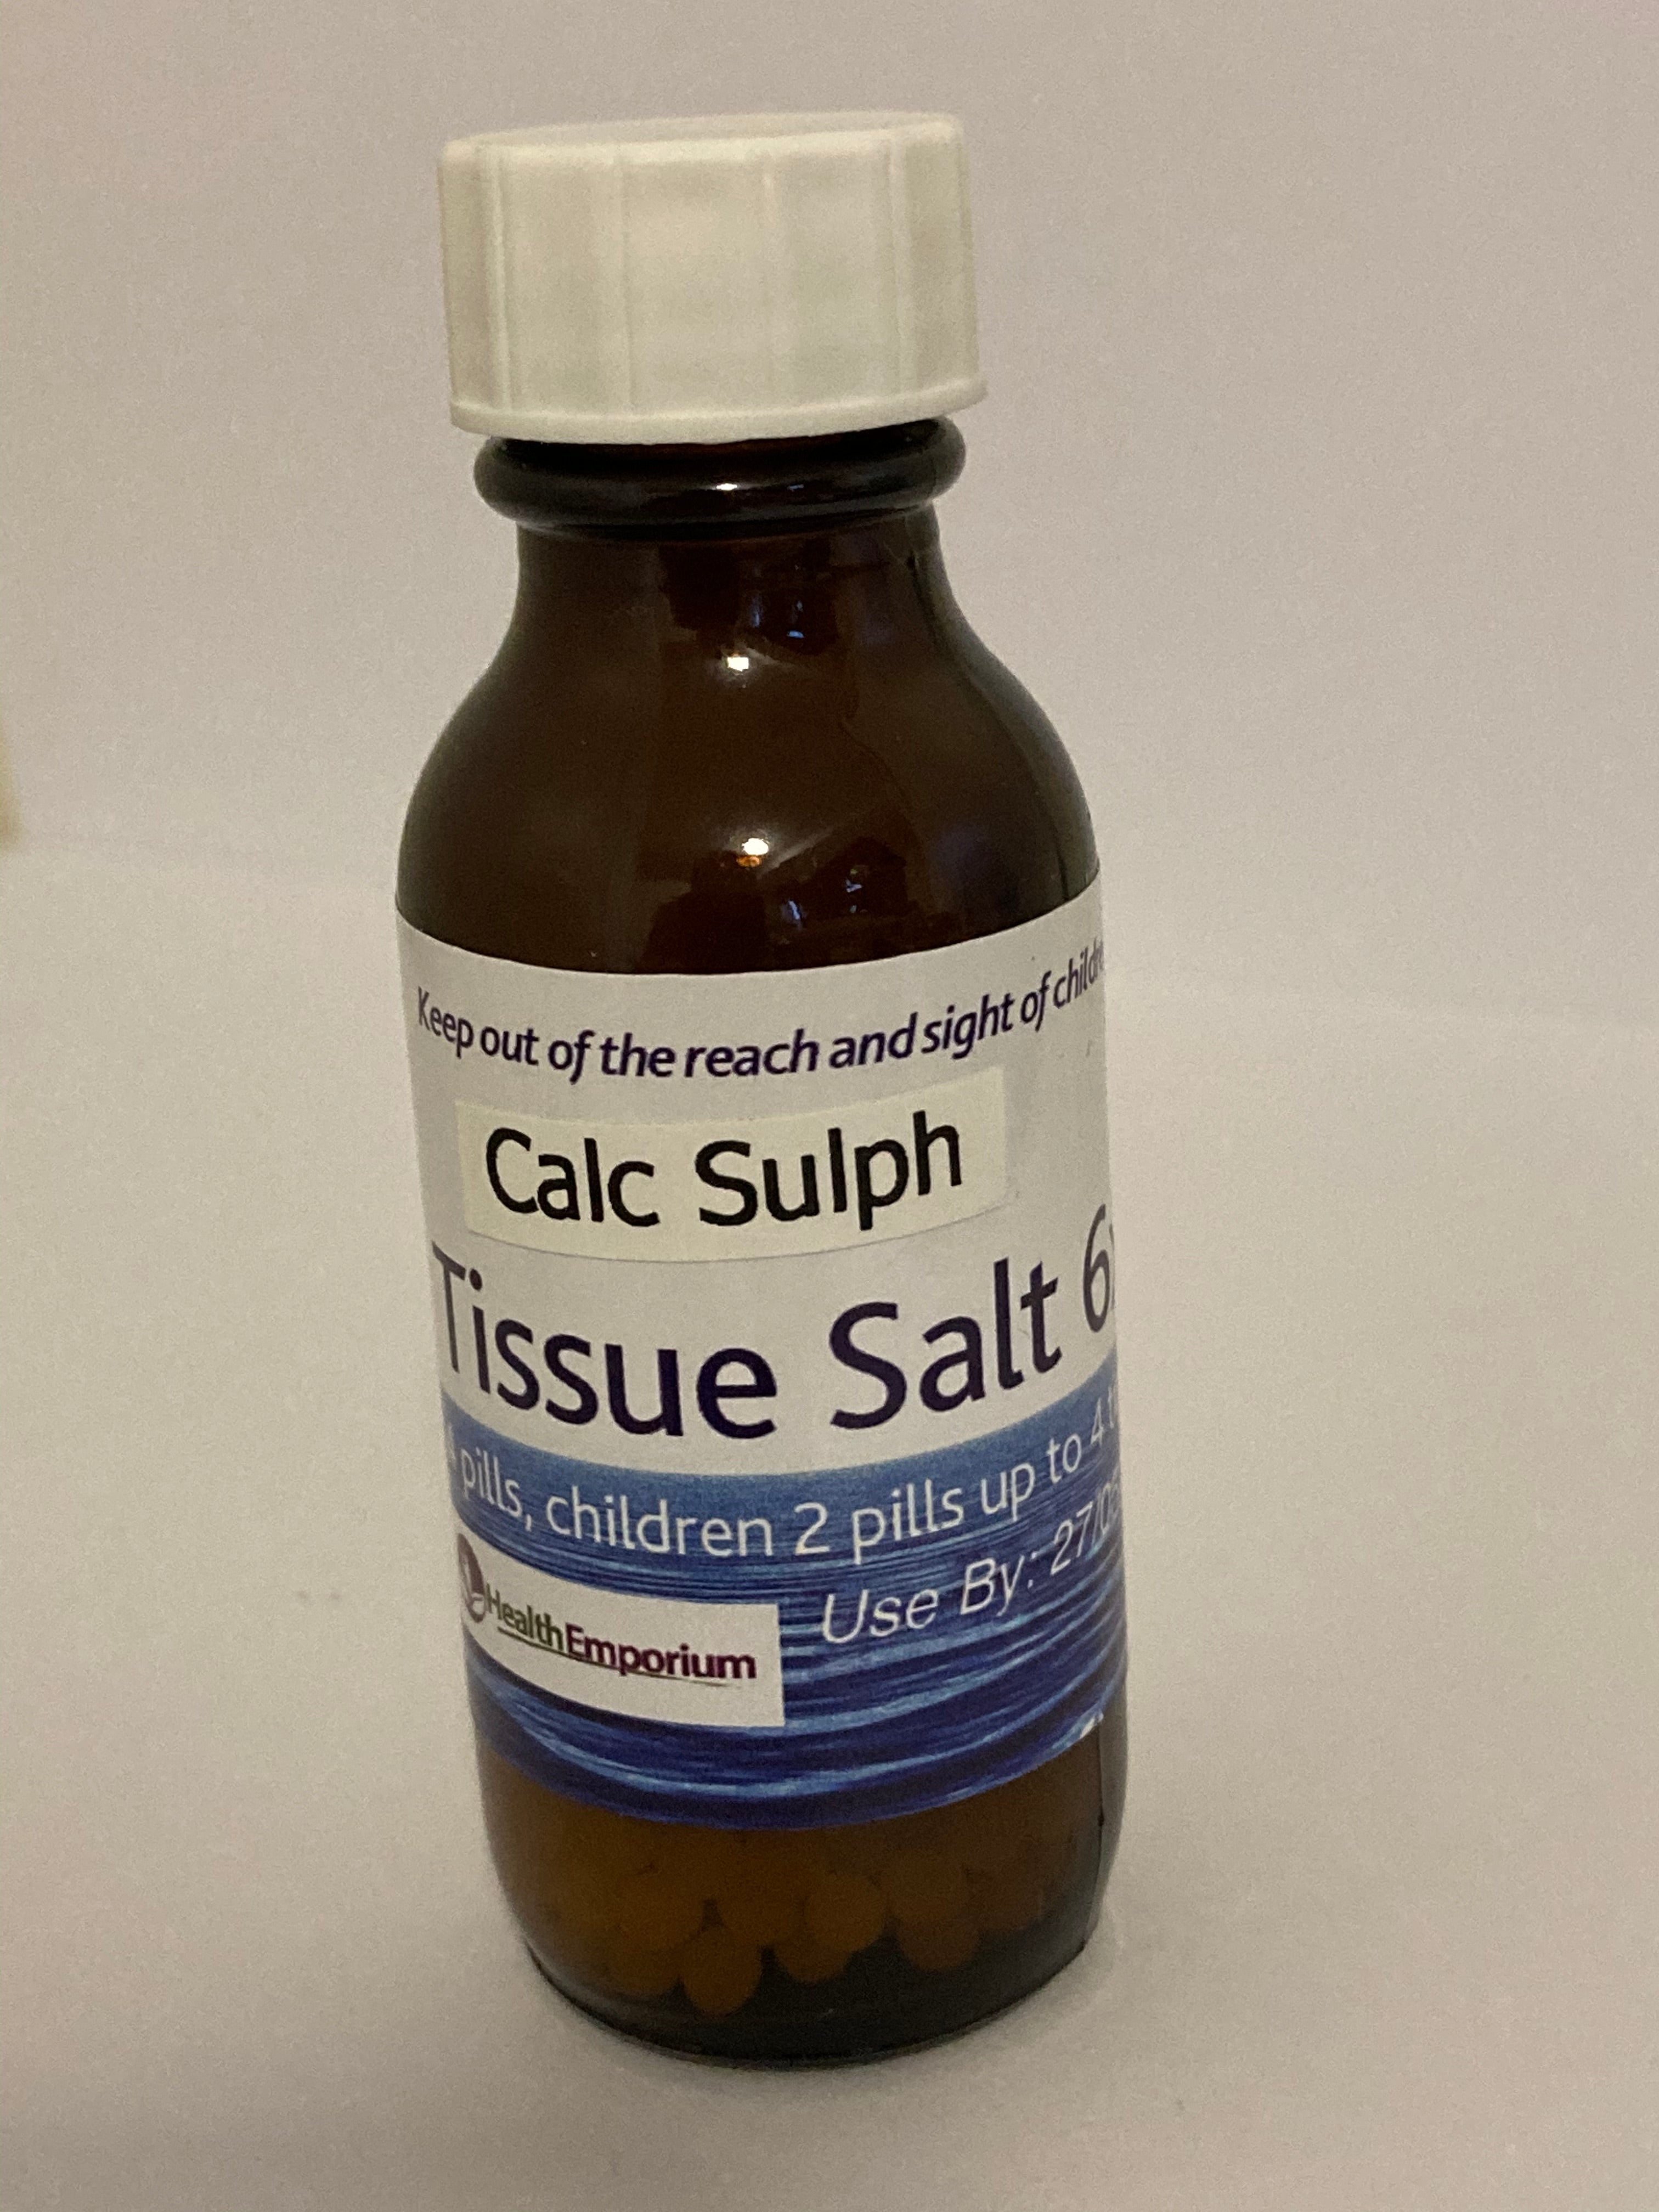 No 3 Calc Sulph Tissue Salts